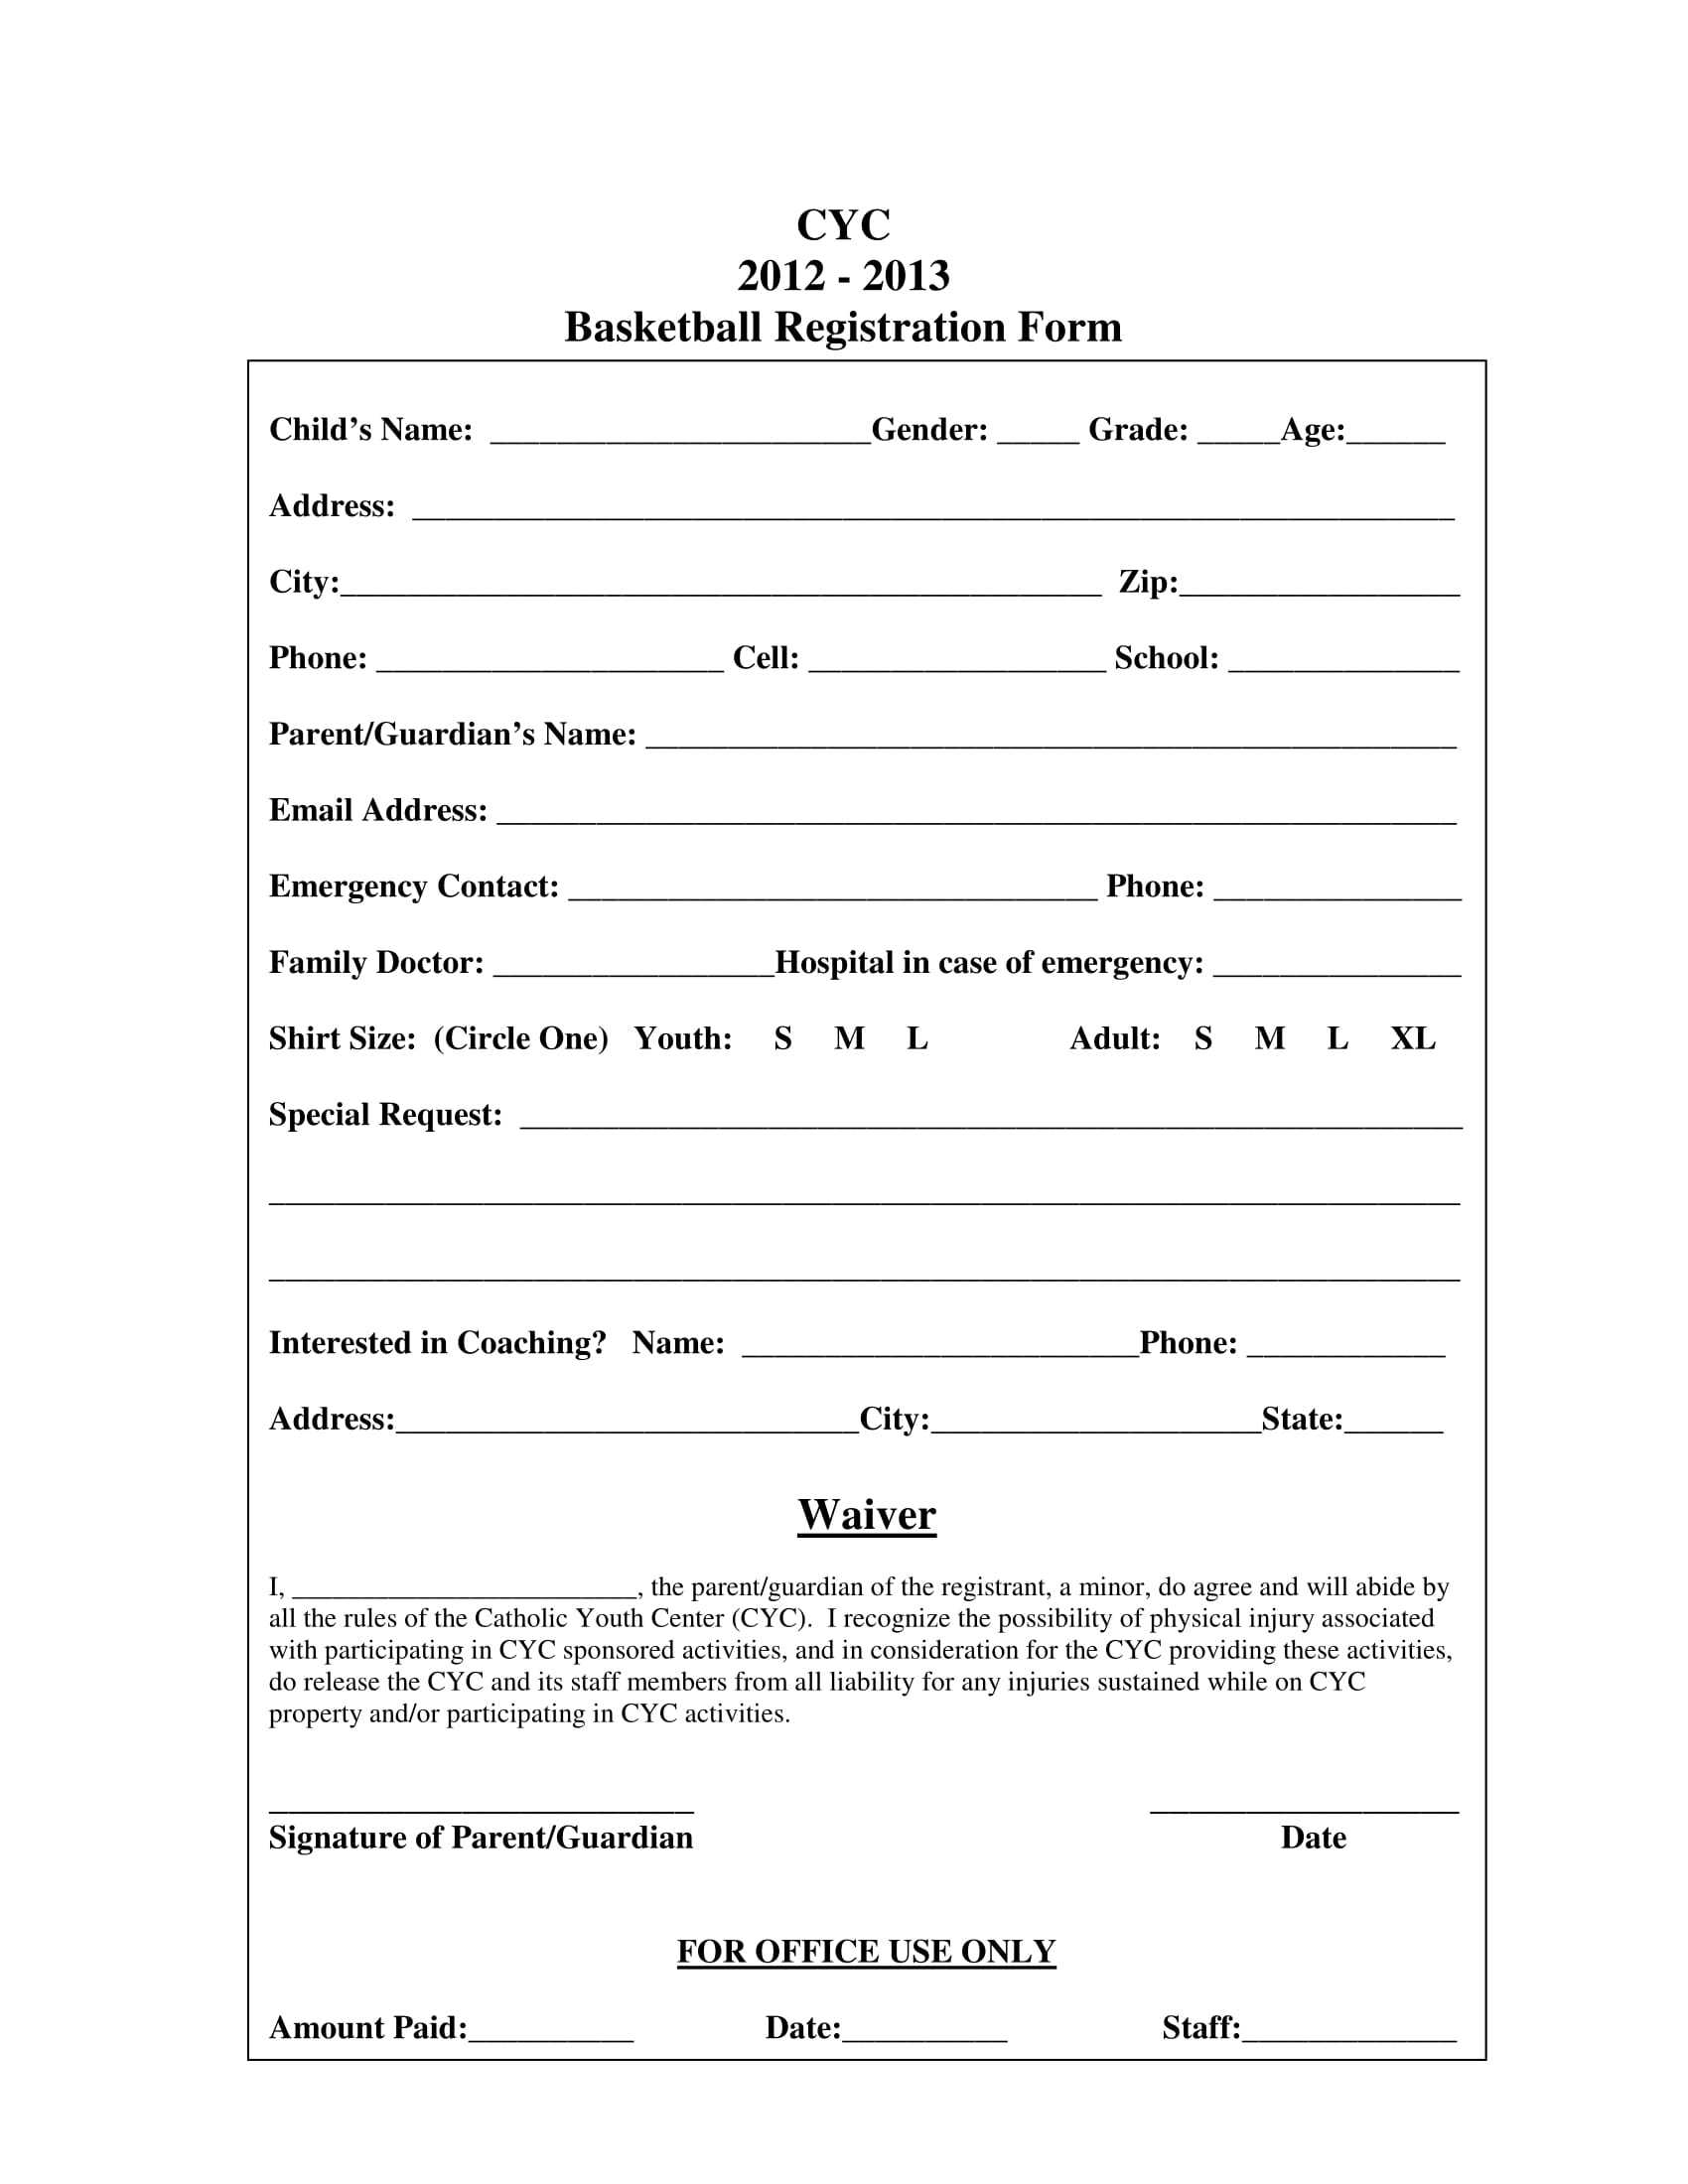 Basketball Registration Form Template Word – Dalep With Registration Form Template Word Free